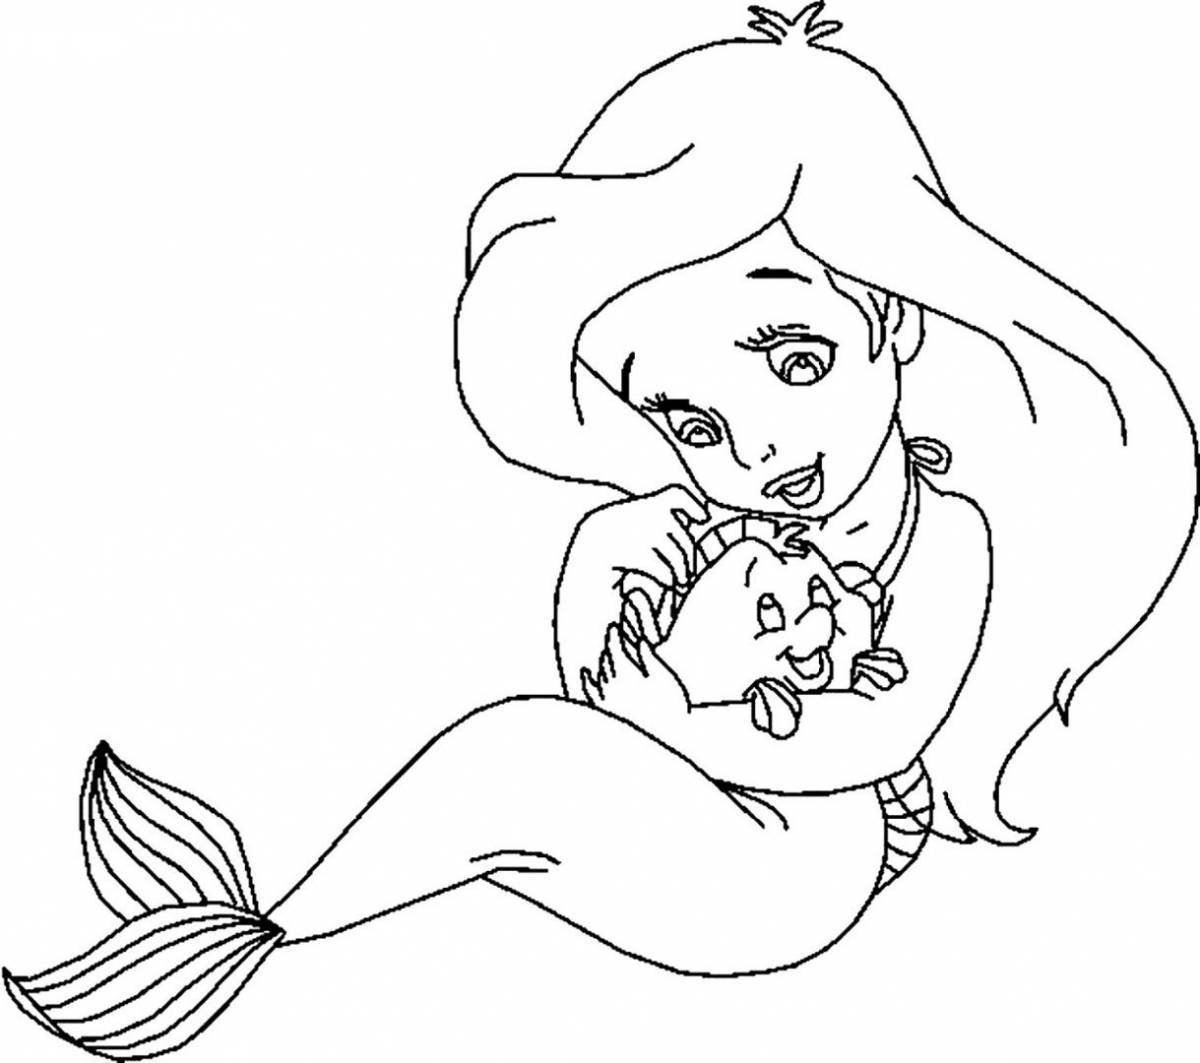 Playful mermaid coloring page